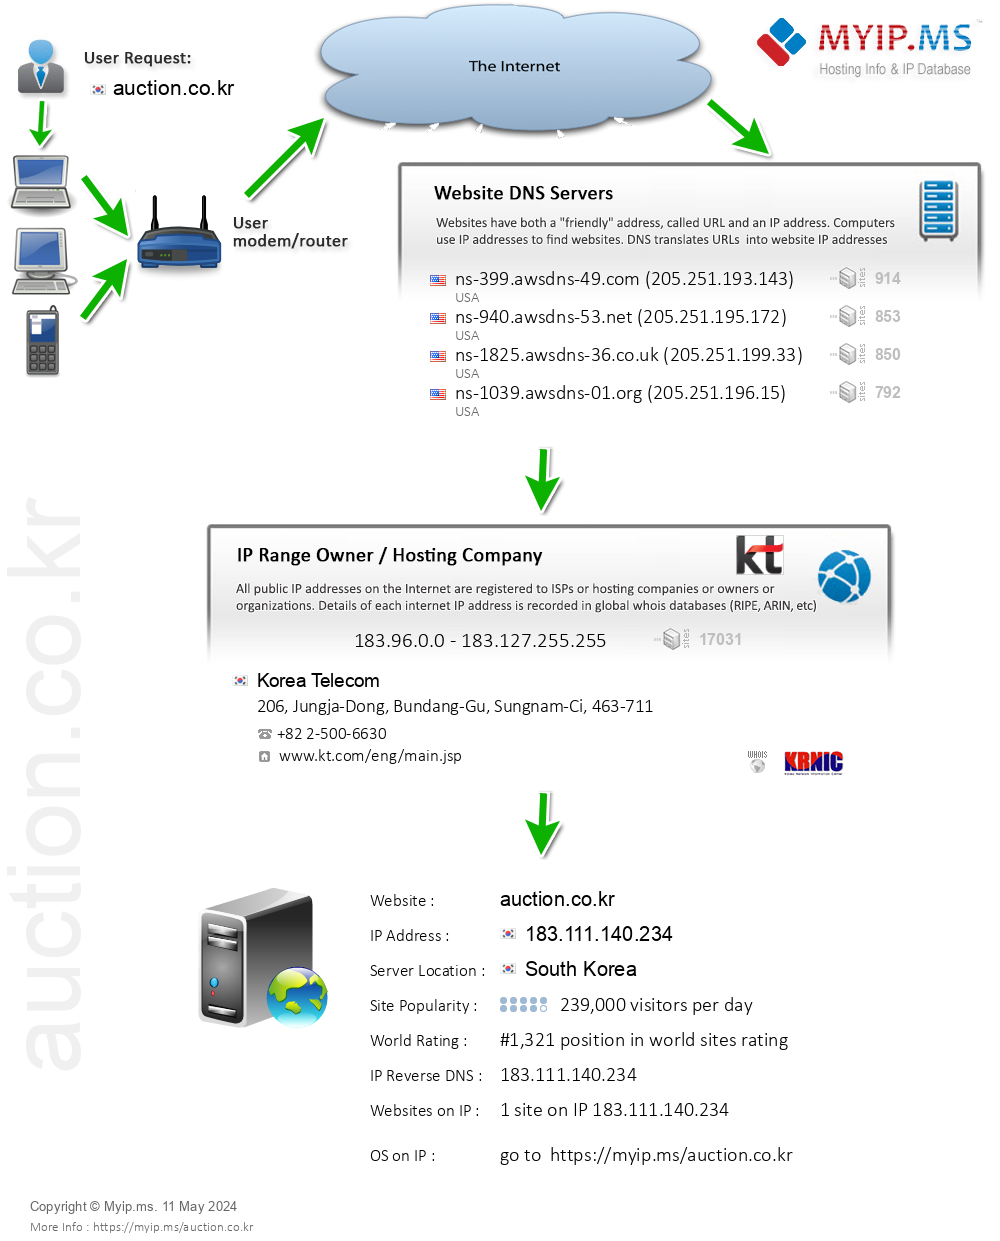 Auction.co.kr - Website Hosting Visual IP Diagram